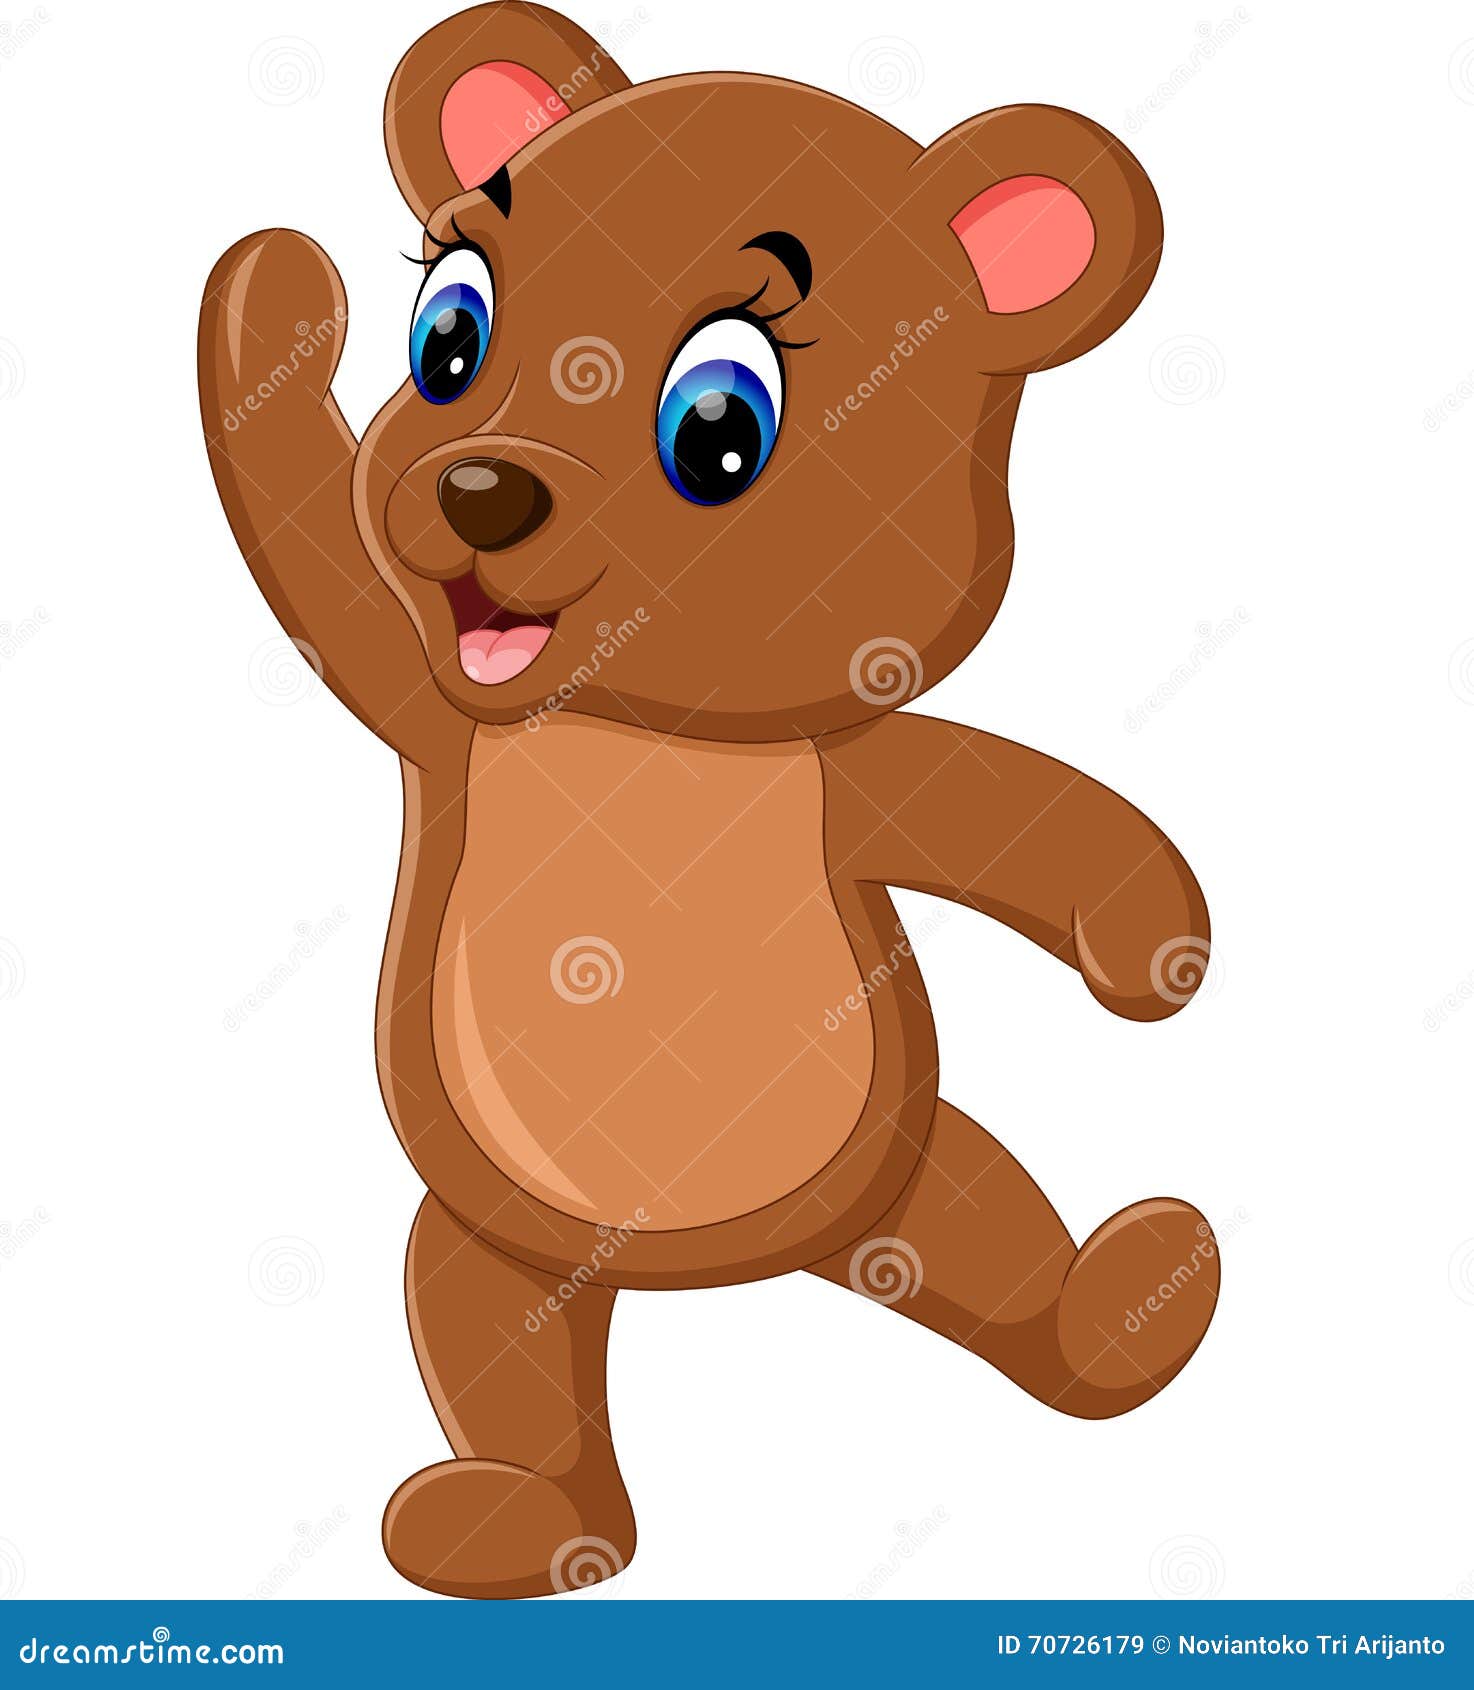 Cute baby bear cartoon stock vector. Illustration of teddy - 70726179